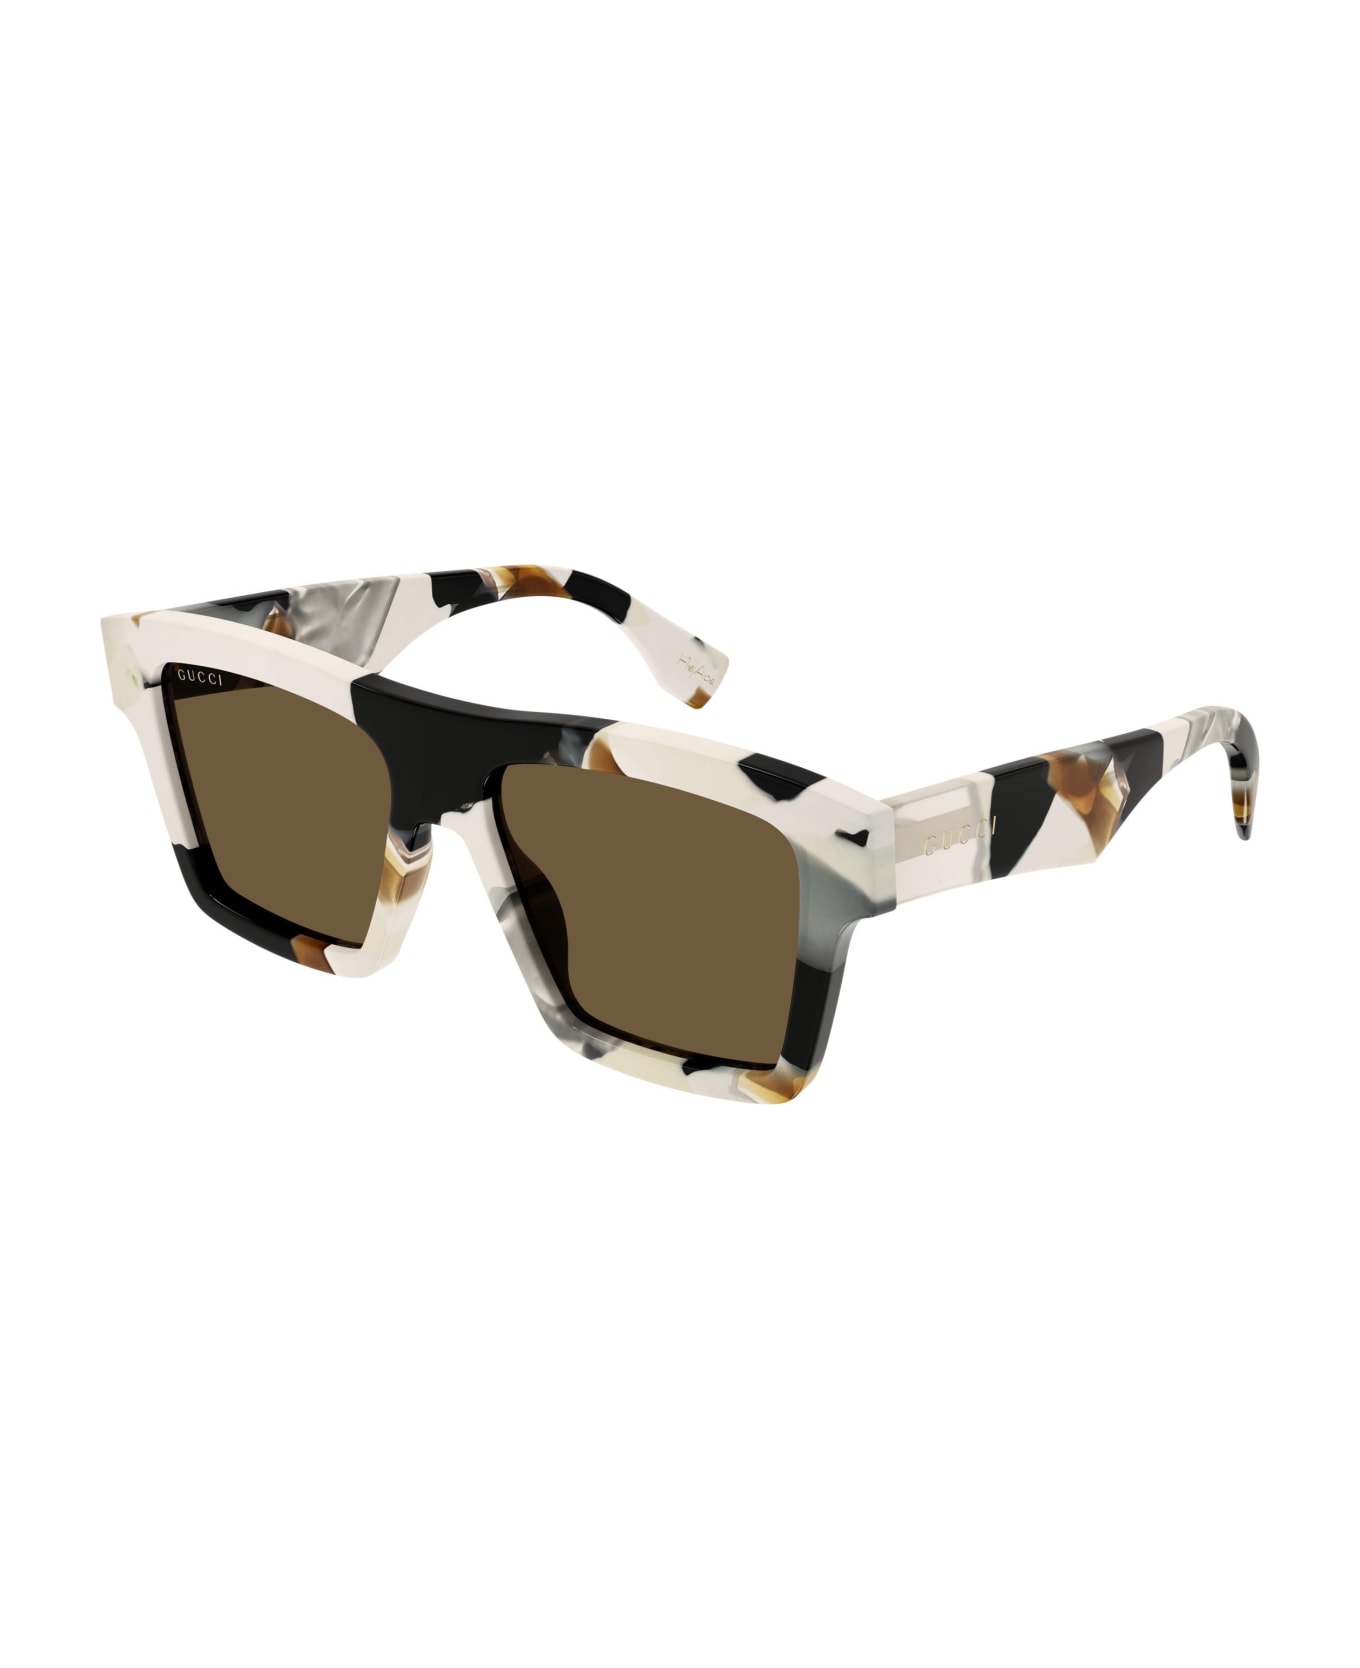 Gucci Eyewear Sunglasses - Bianco e marrone tartarugato/Marrone